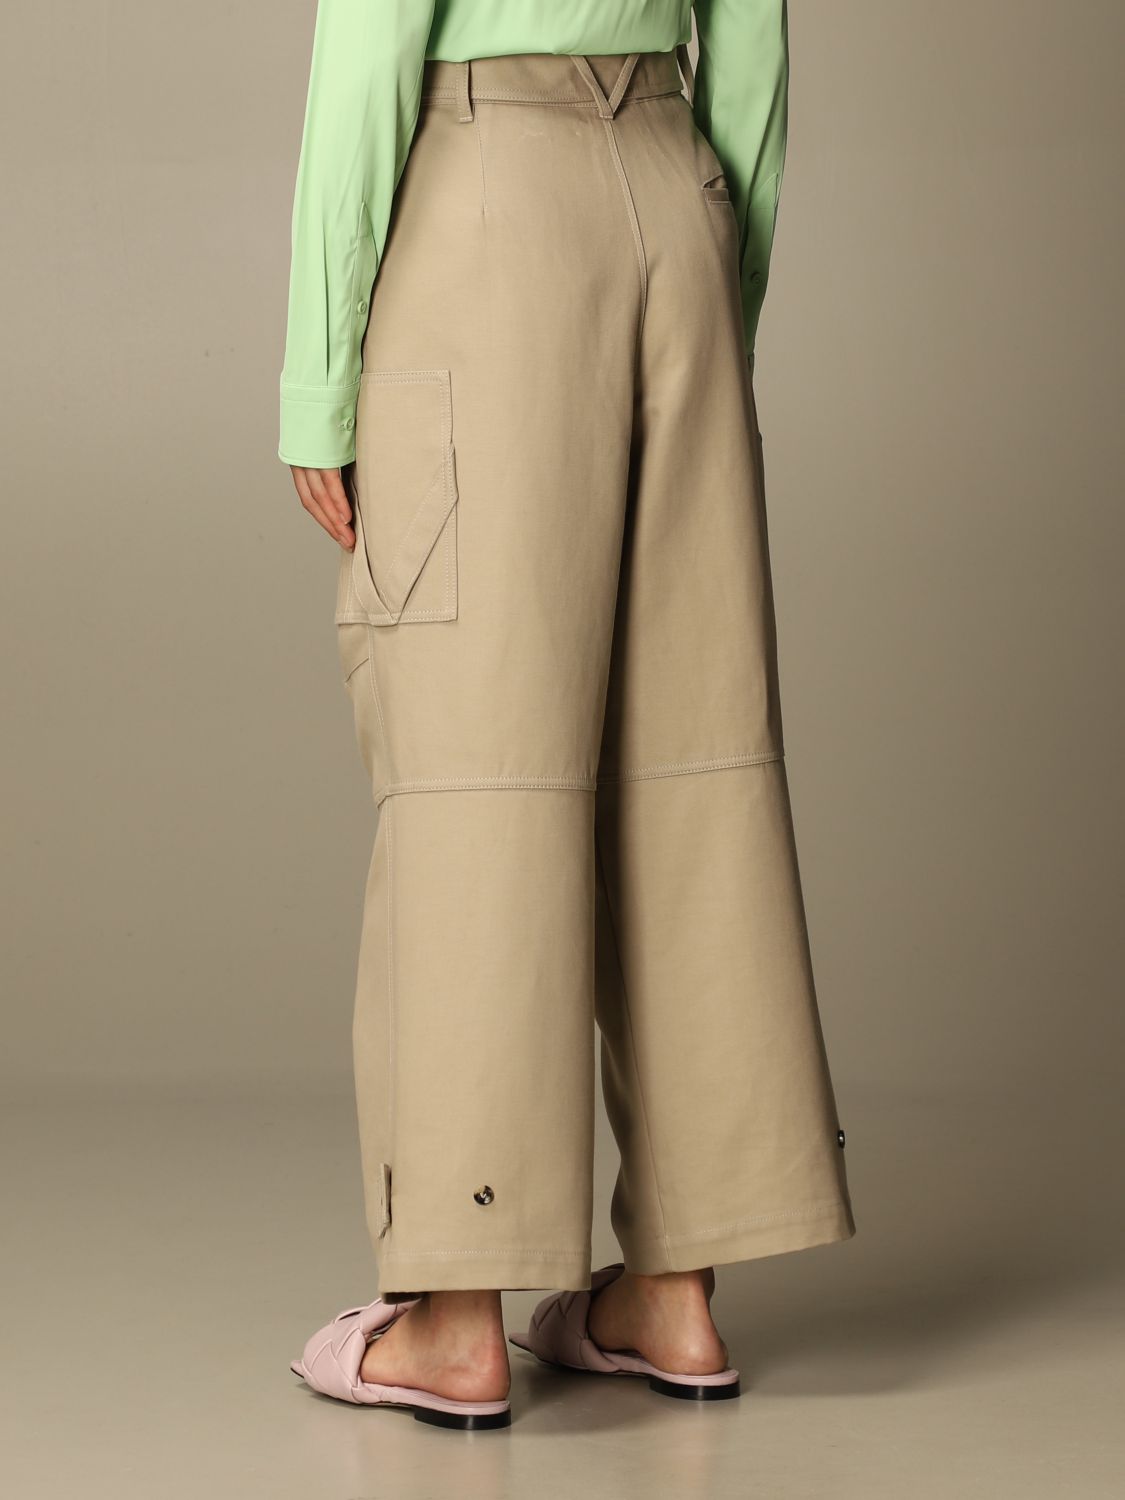 BOTTEGA VENETA: wide trousers in cotton canvas - Sand | Bottega